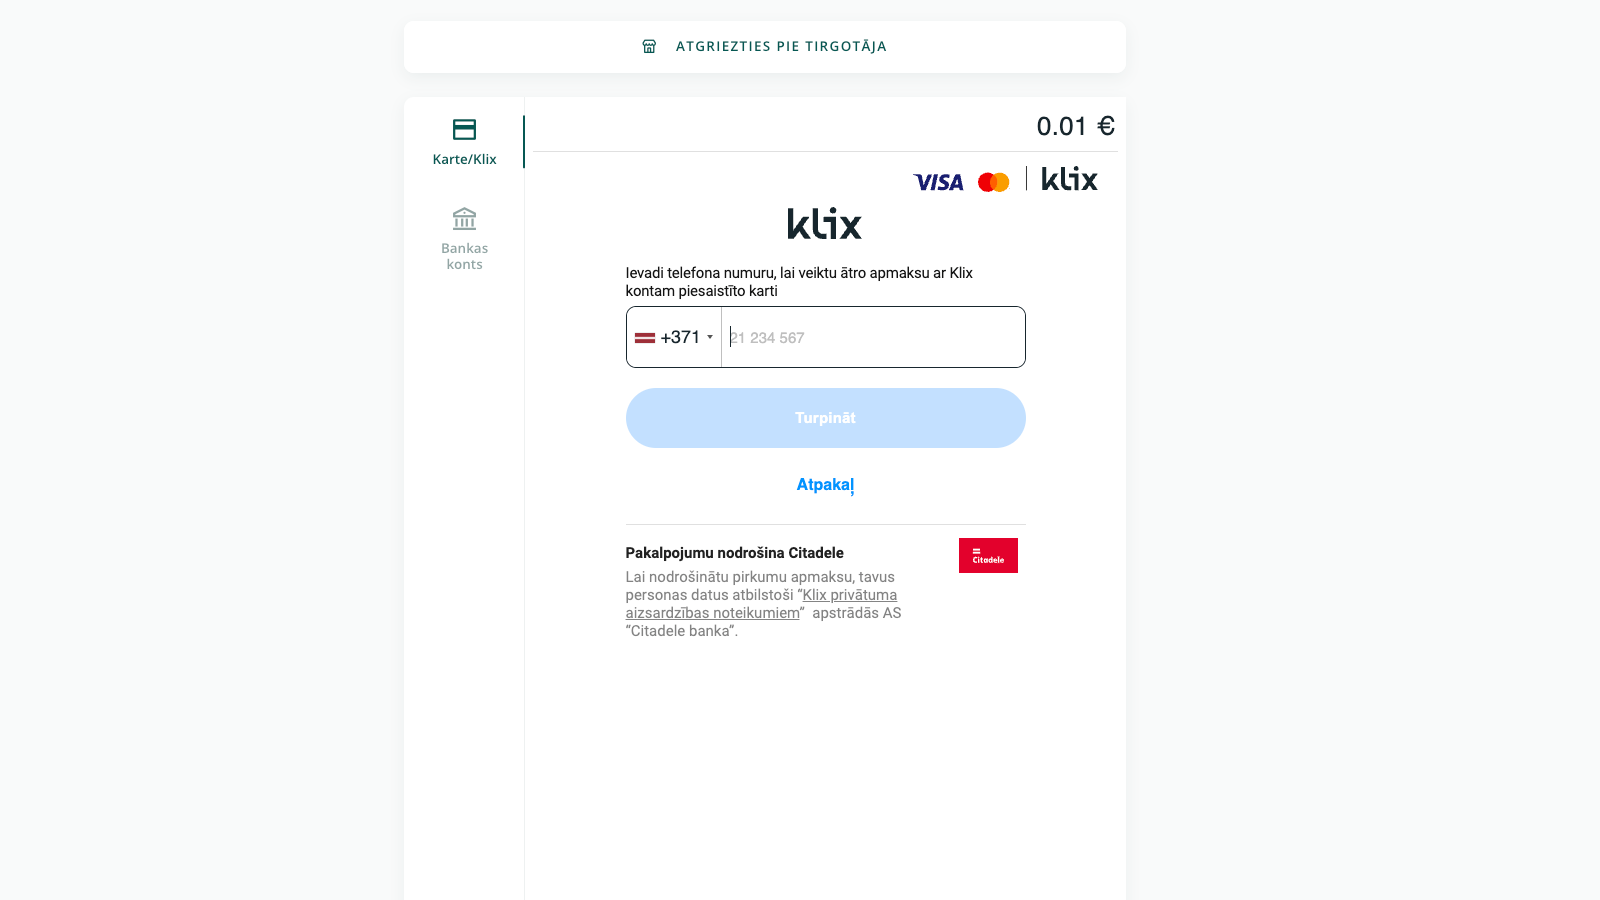 Klix widget - fast checkout usint phone number